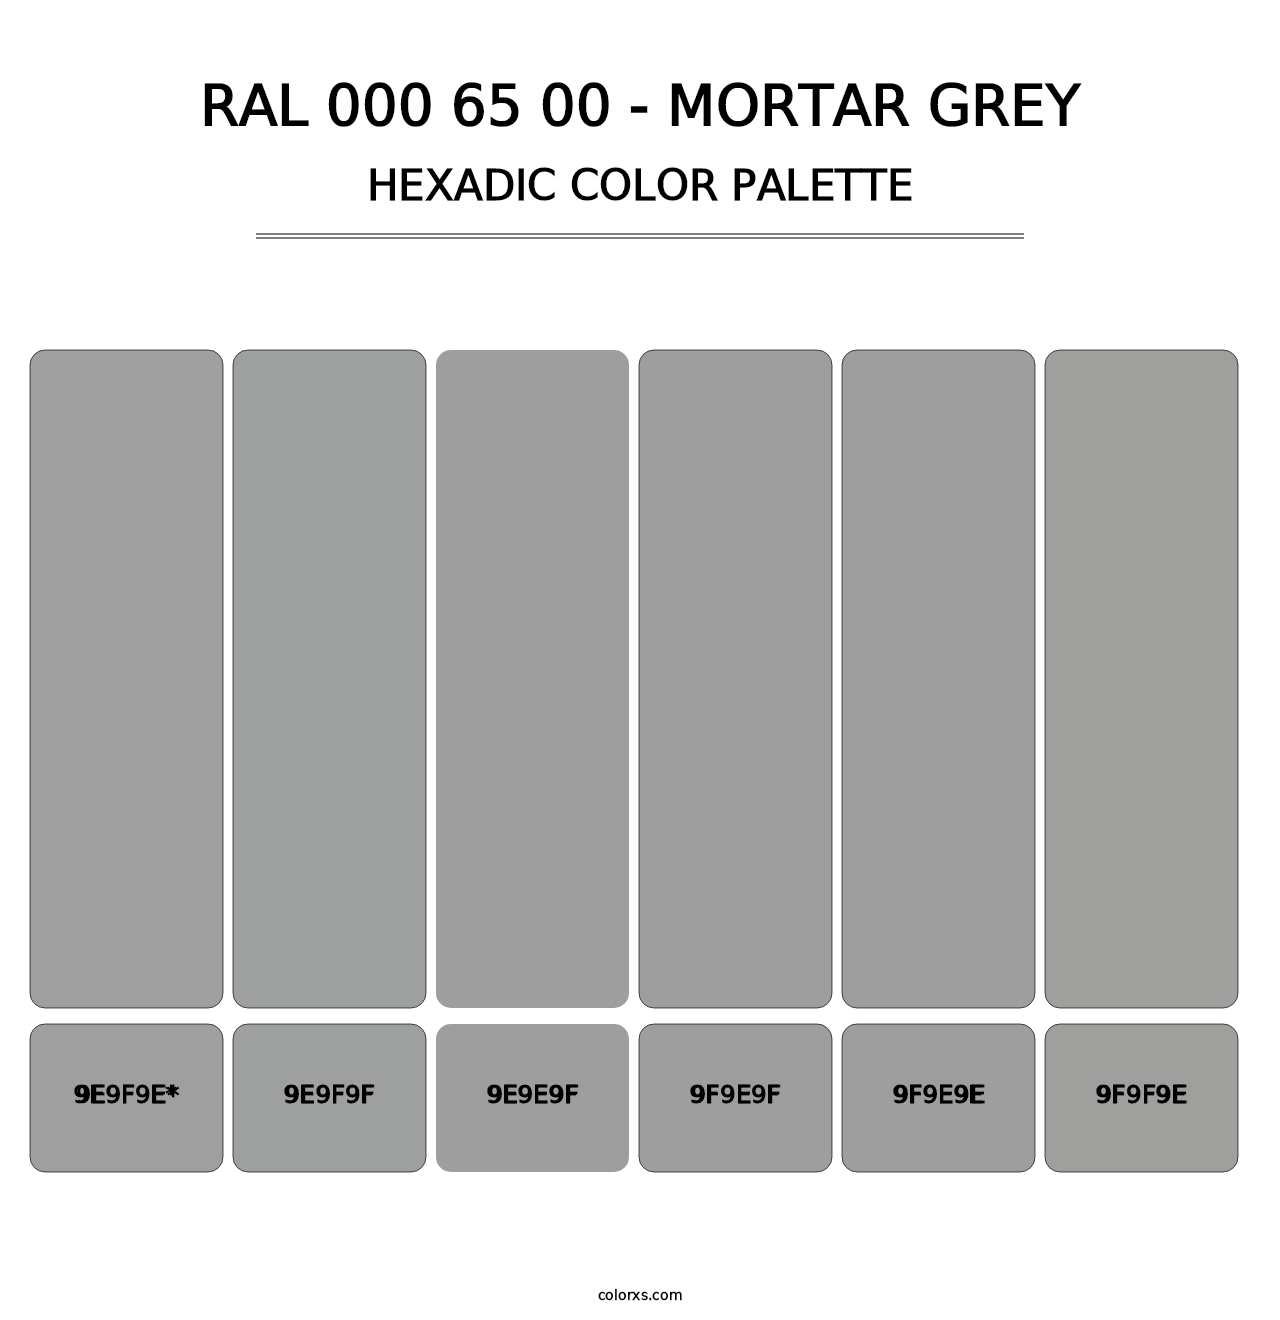 RAL 000 65 00 - Mortar Grey - Hexadic Color Palette